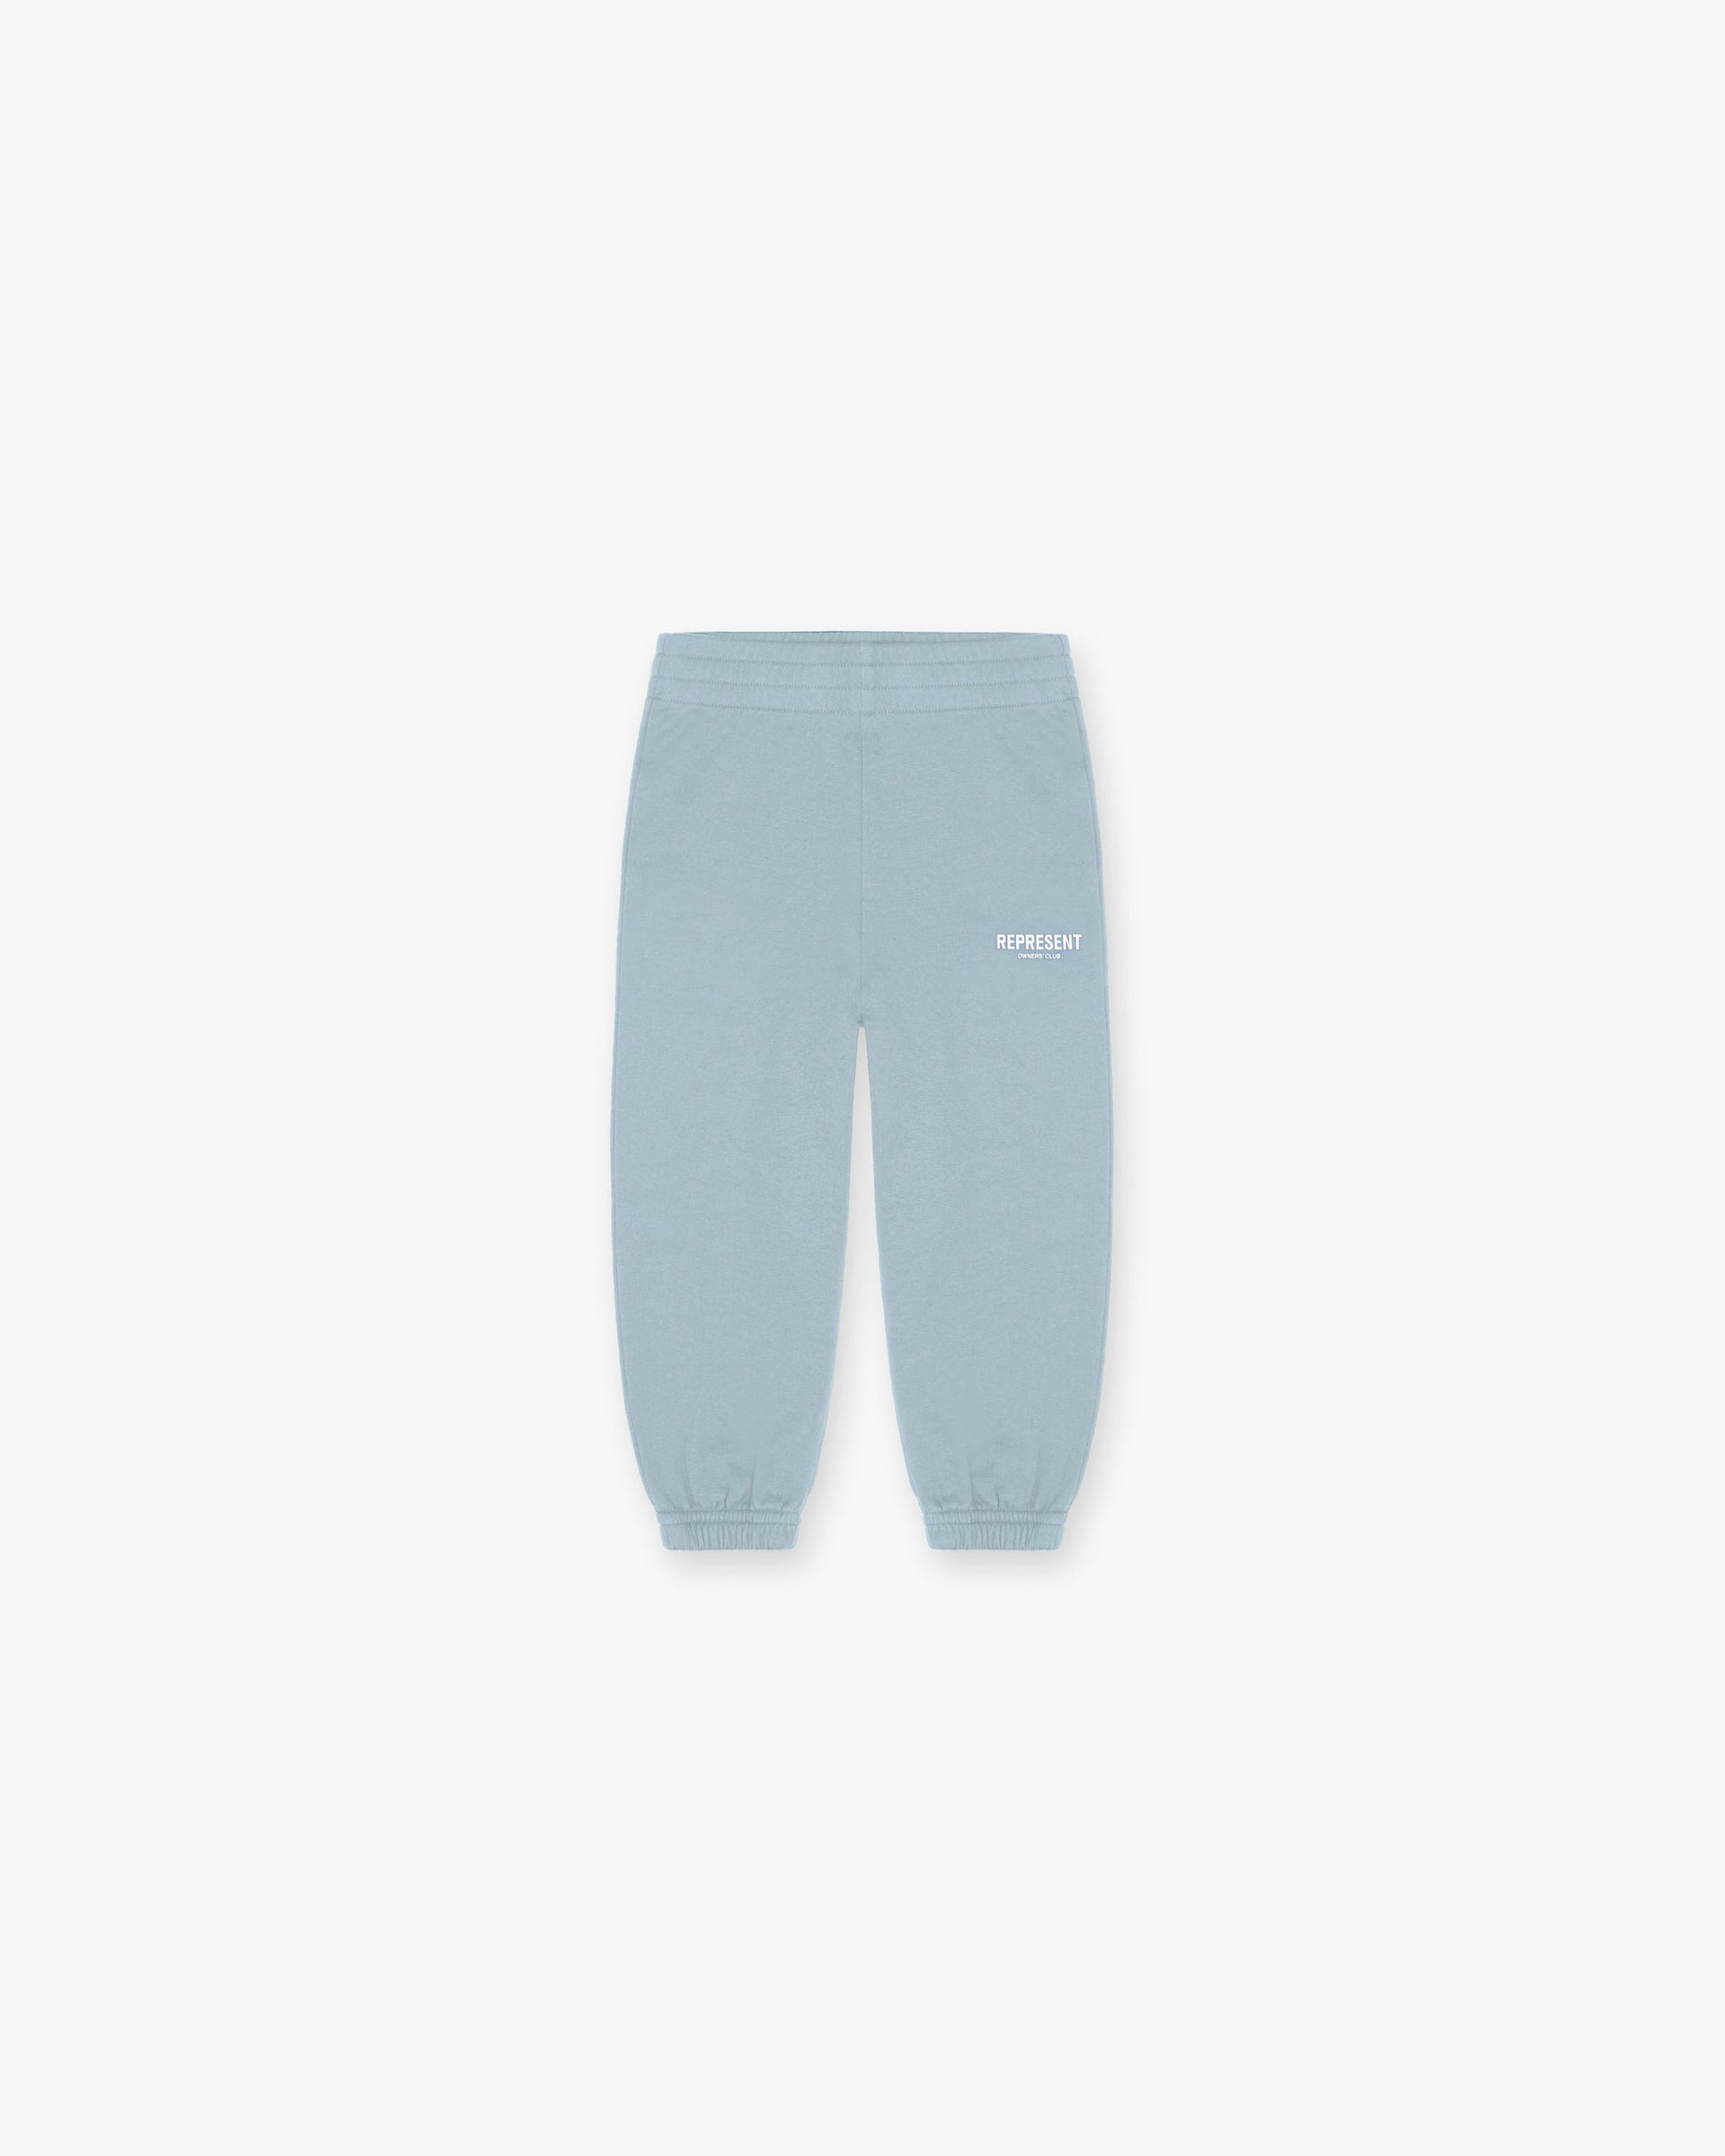 Represent Mini Owners Club Sweatpants | Powder Blue Pants Owners Club | Represent Clo